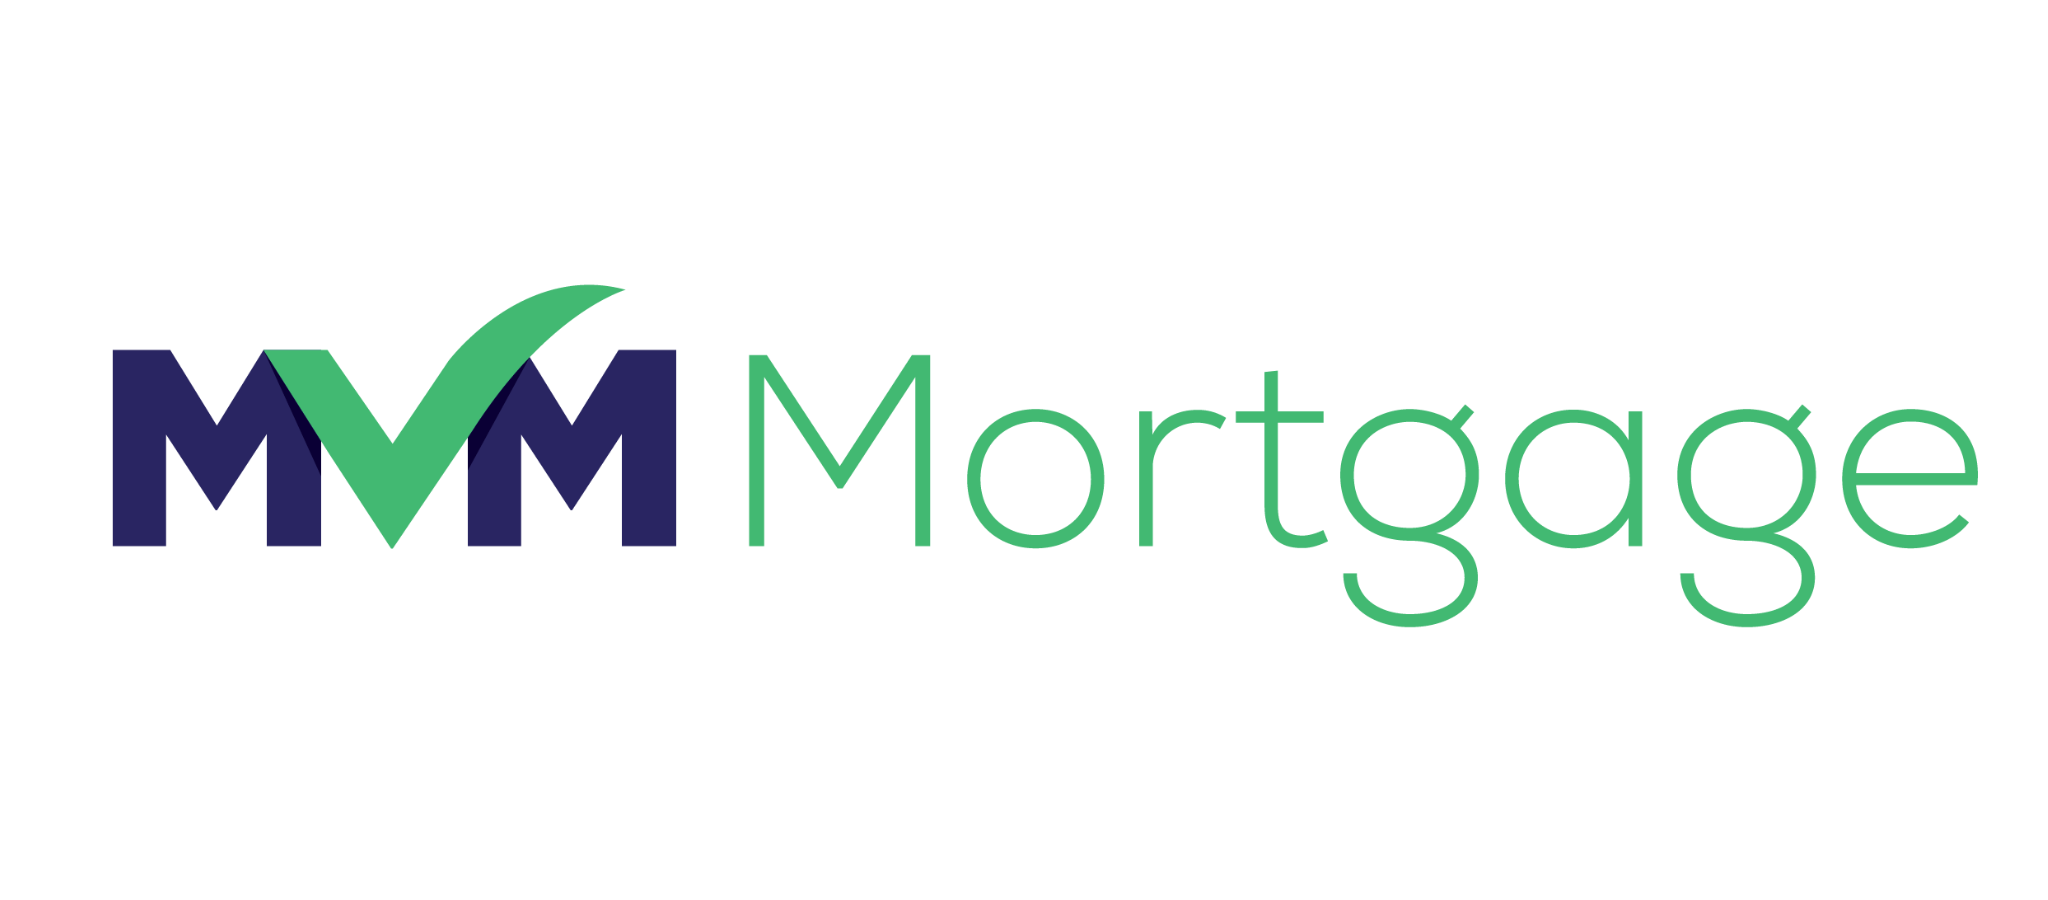 MVM MortgageCase Reference